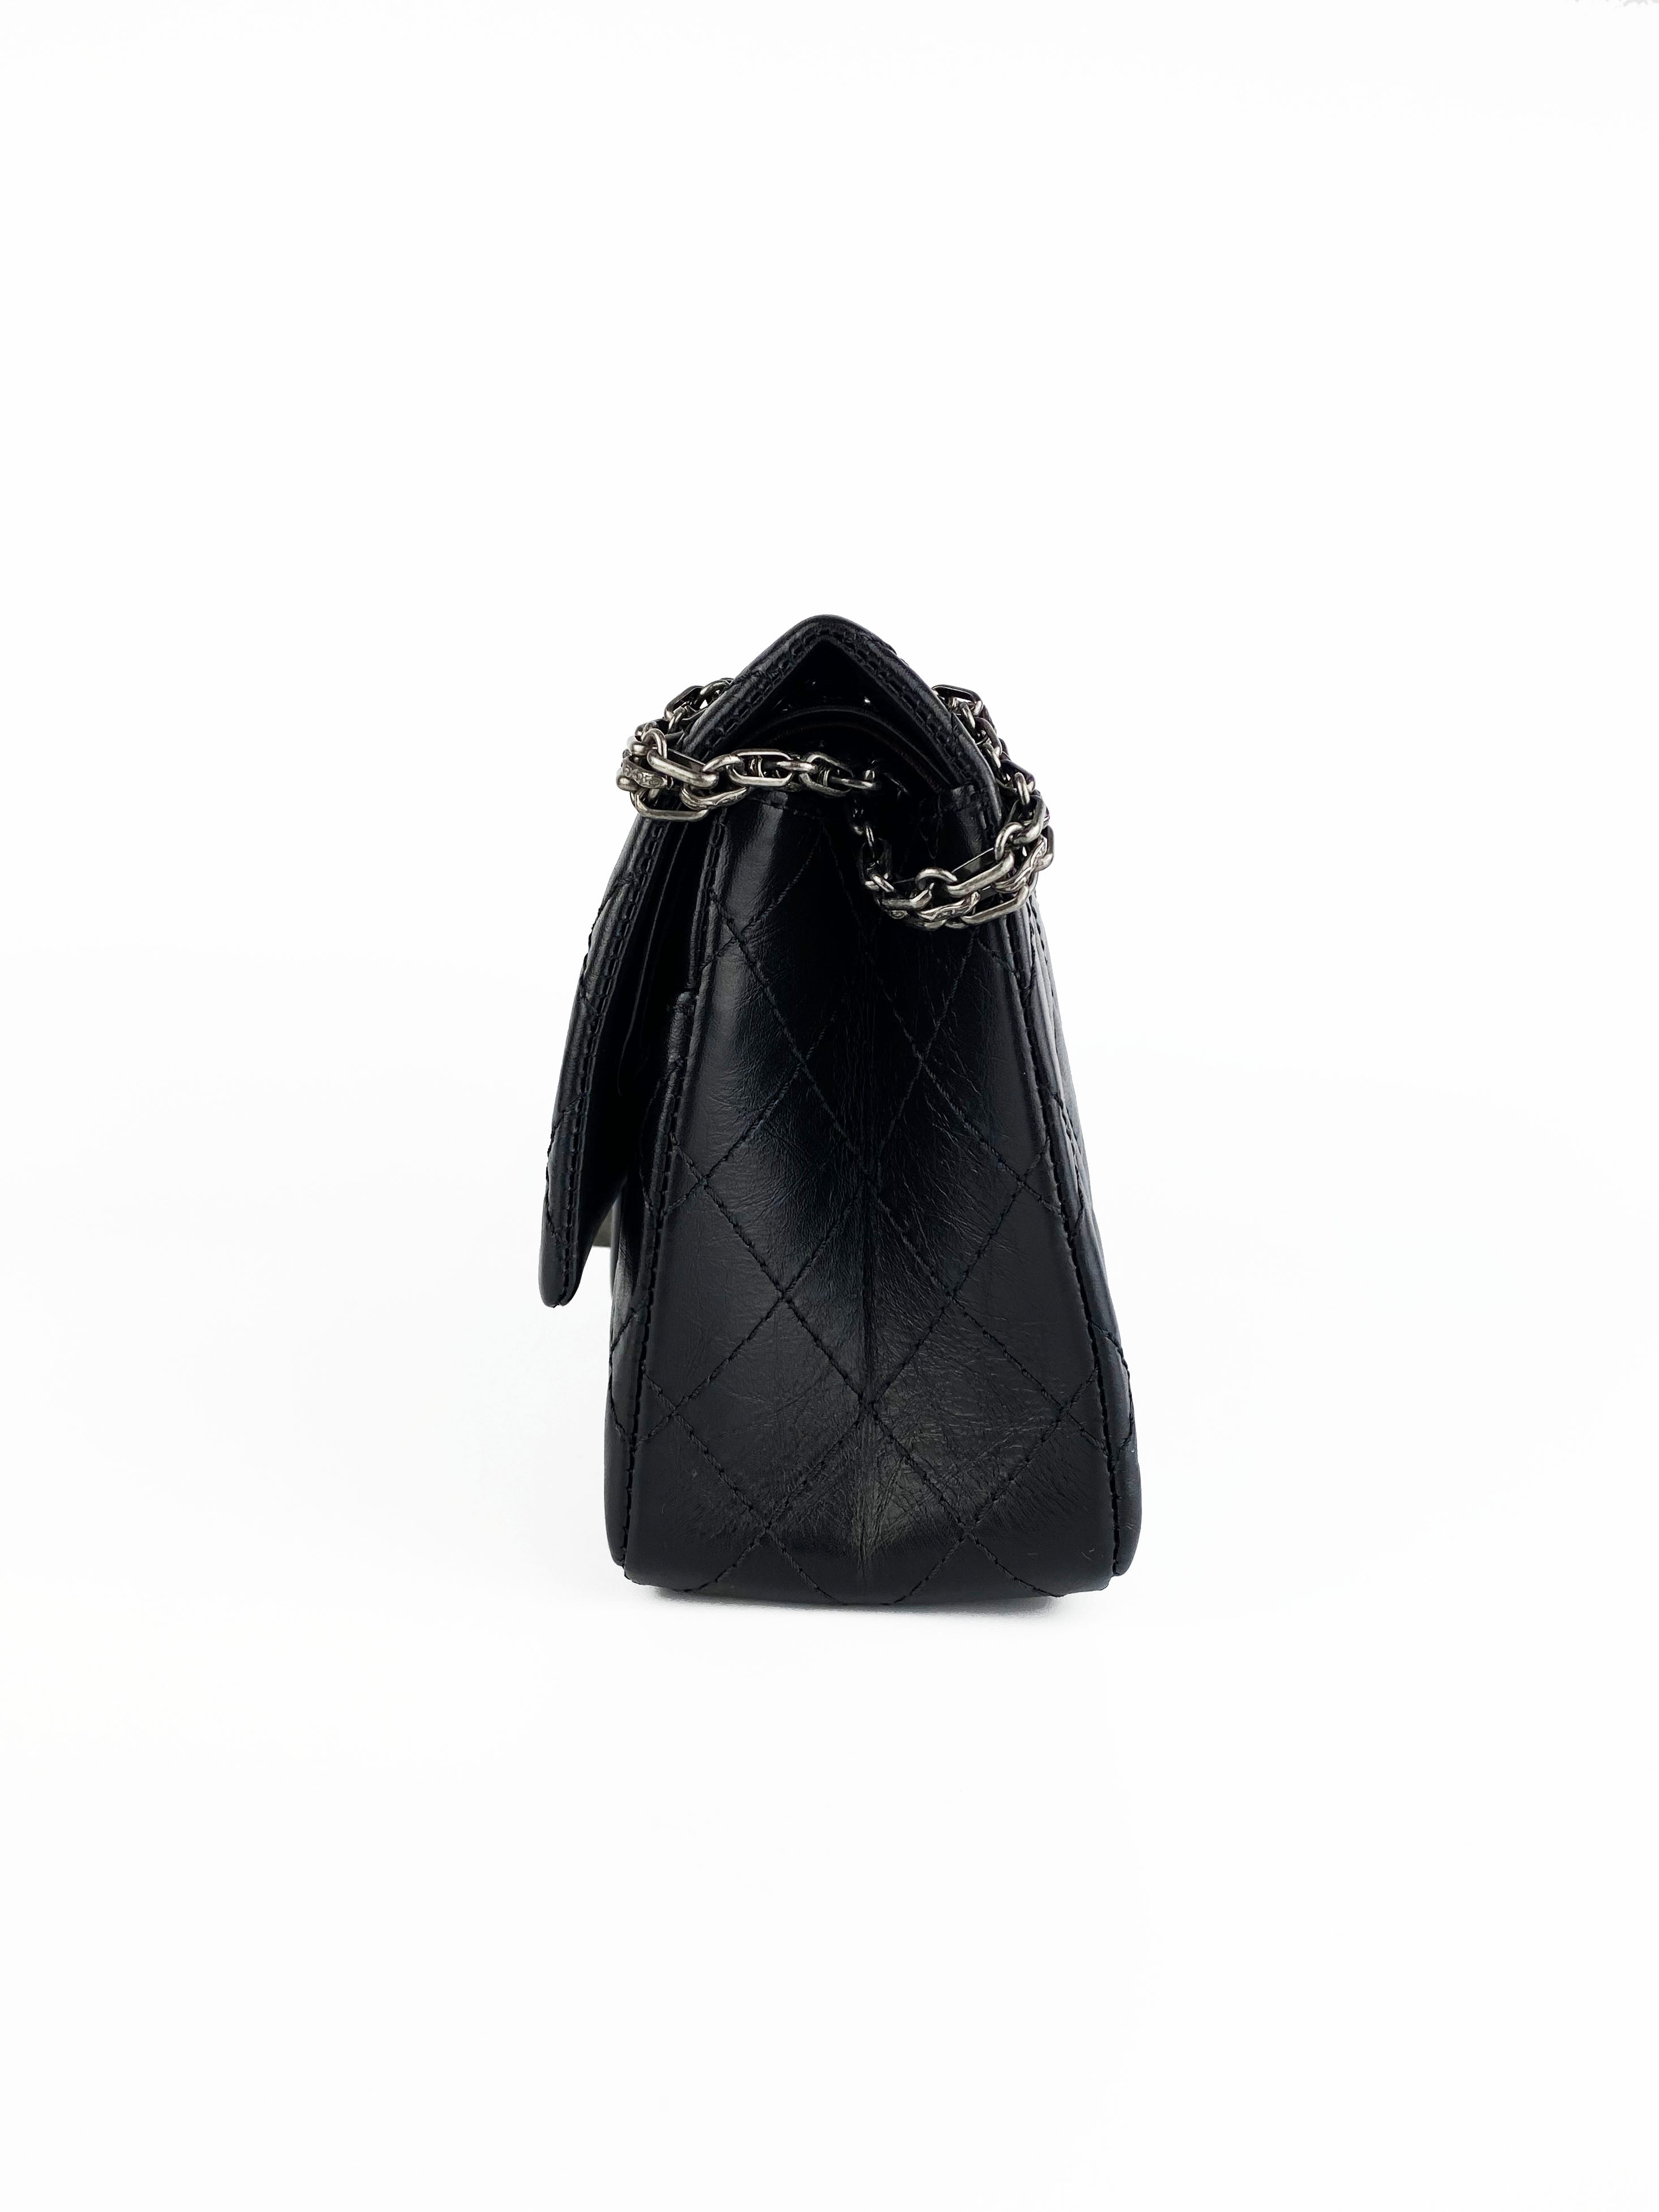 Chanel Black 2.55 Flap Bag